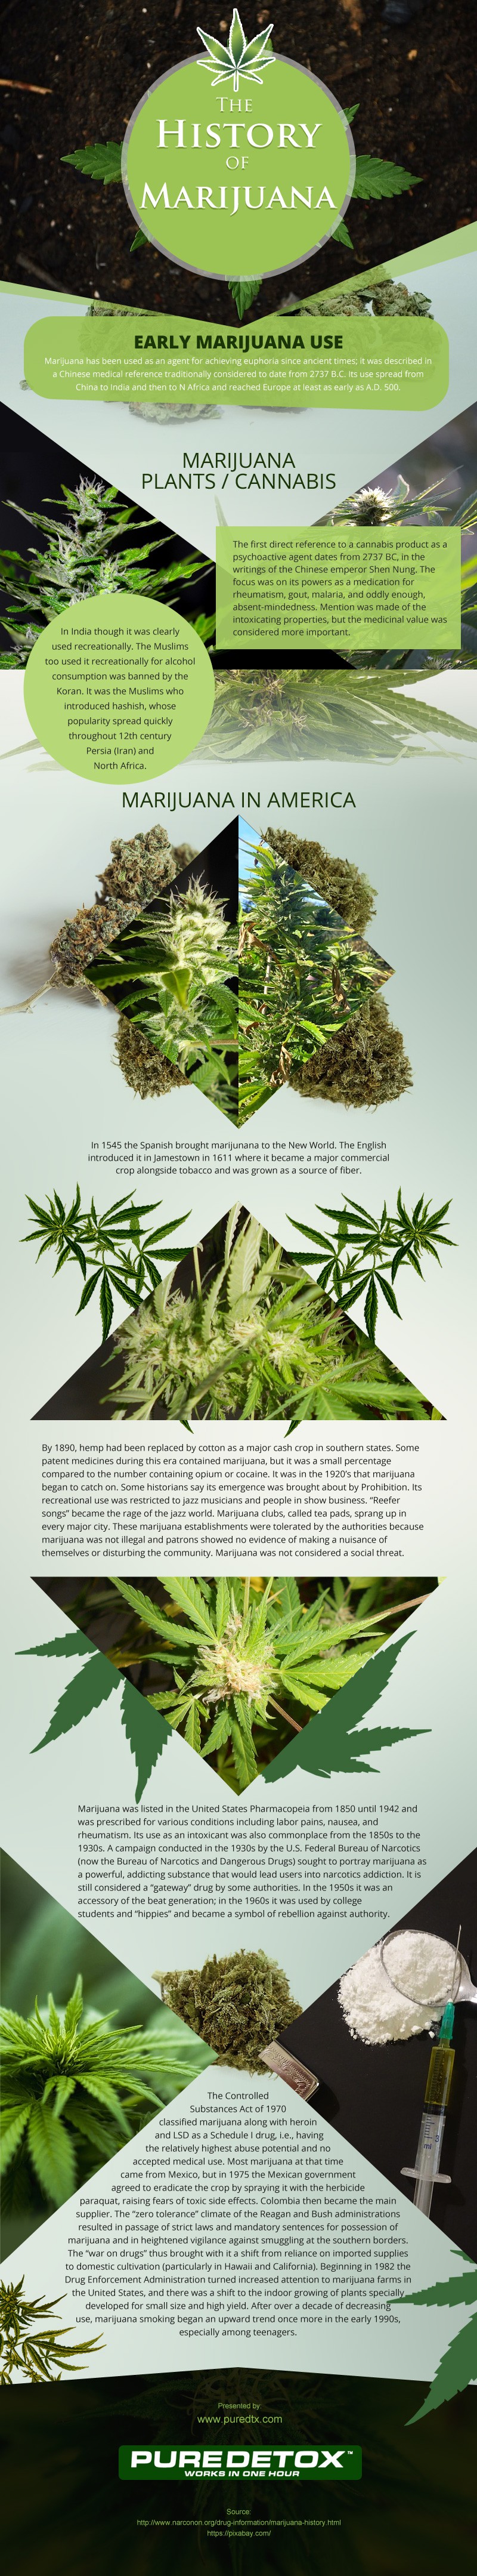 The History of Marijuana [infographic]